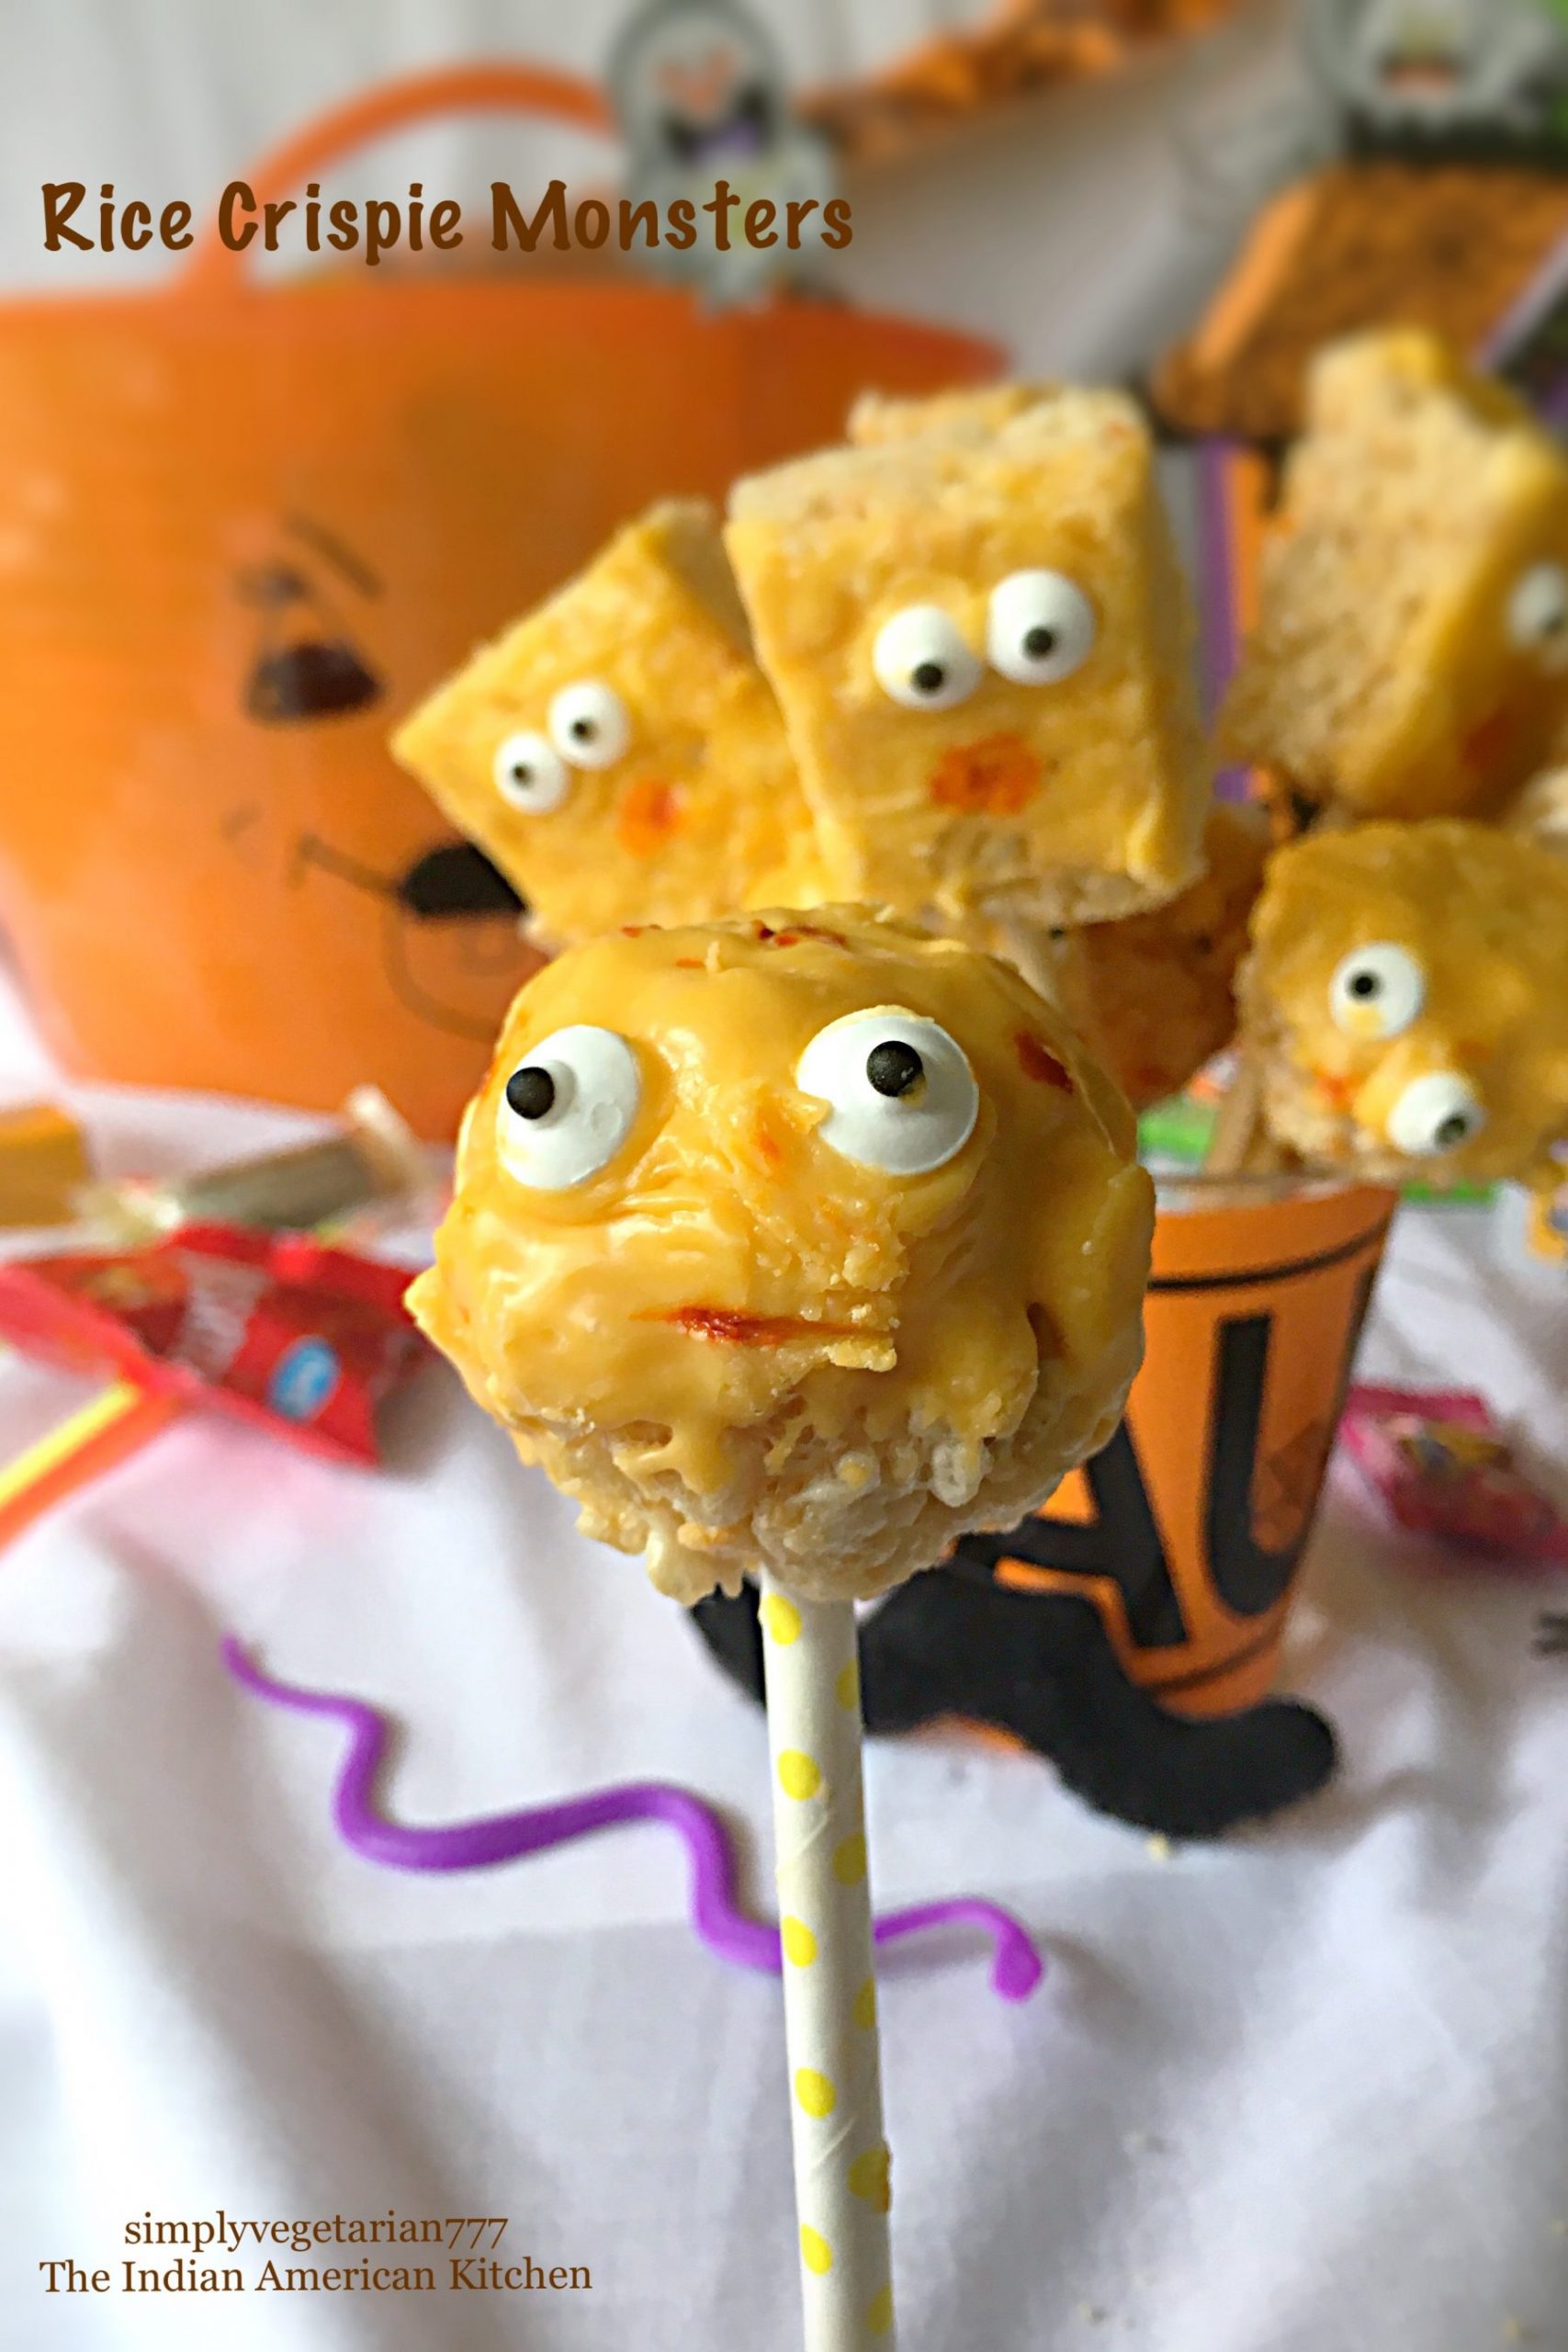 Rice Crispie Monsters - Glutenfree Halloween Treats